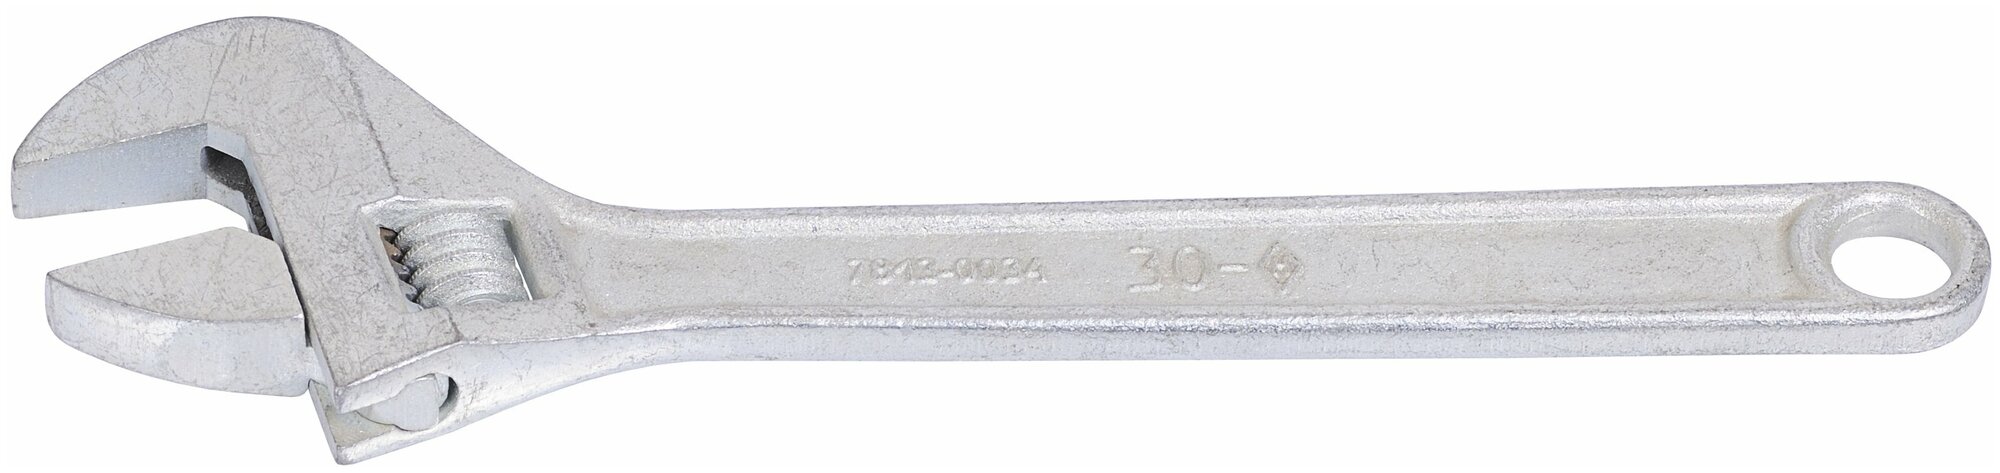 Ключ разводной 0-30 мм Новосибирск НИЗ 13101T | цена за 1 шт